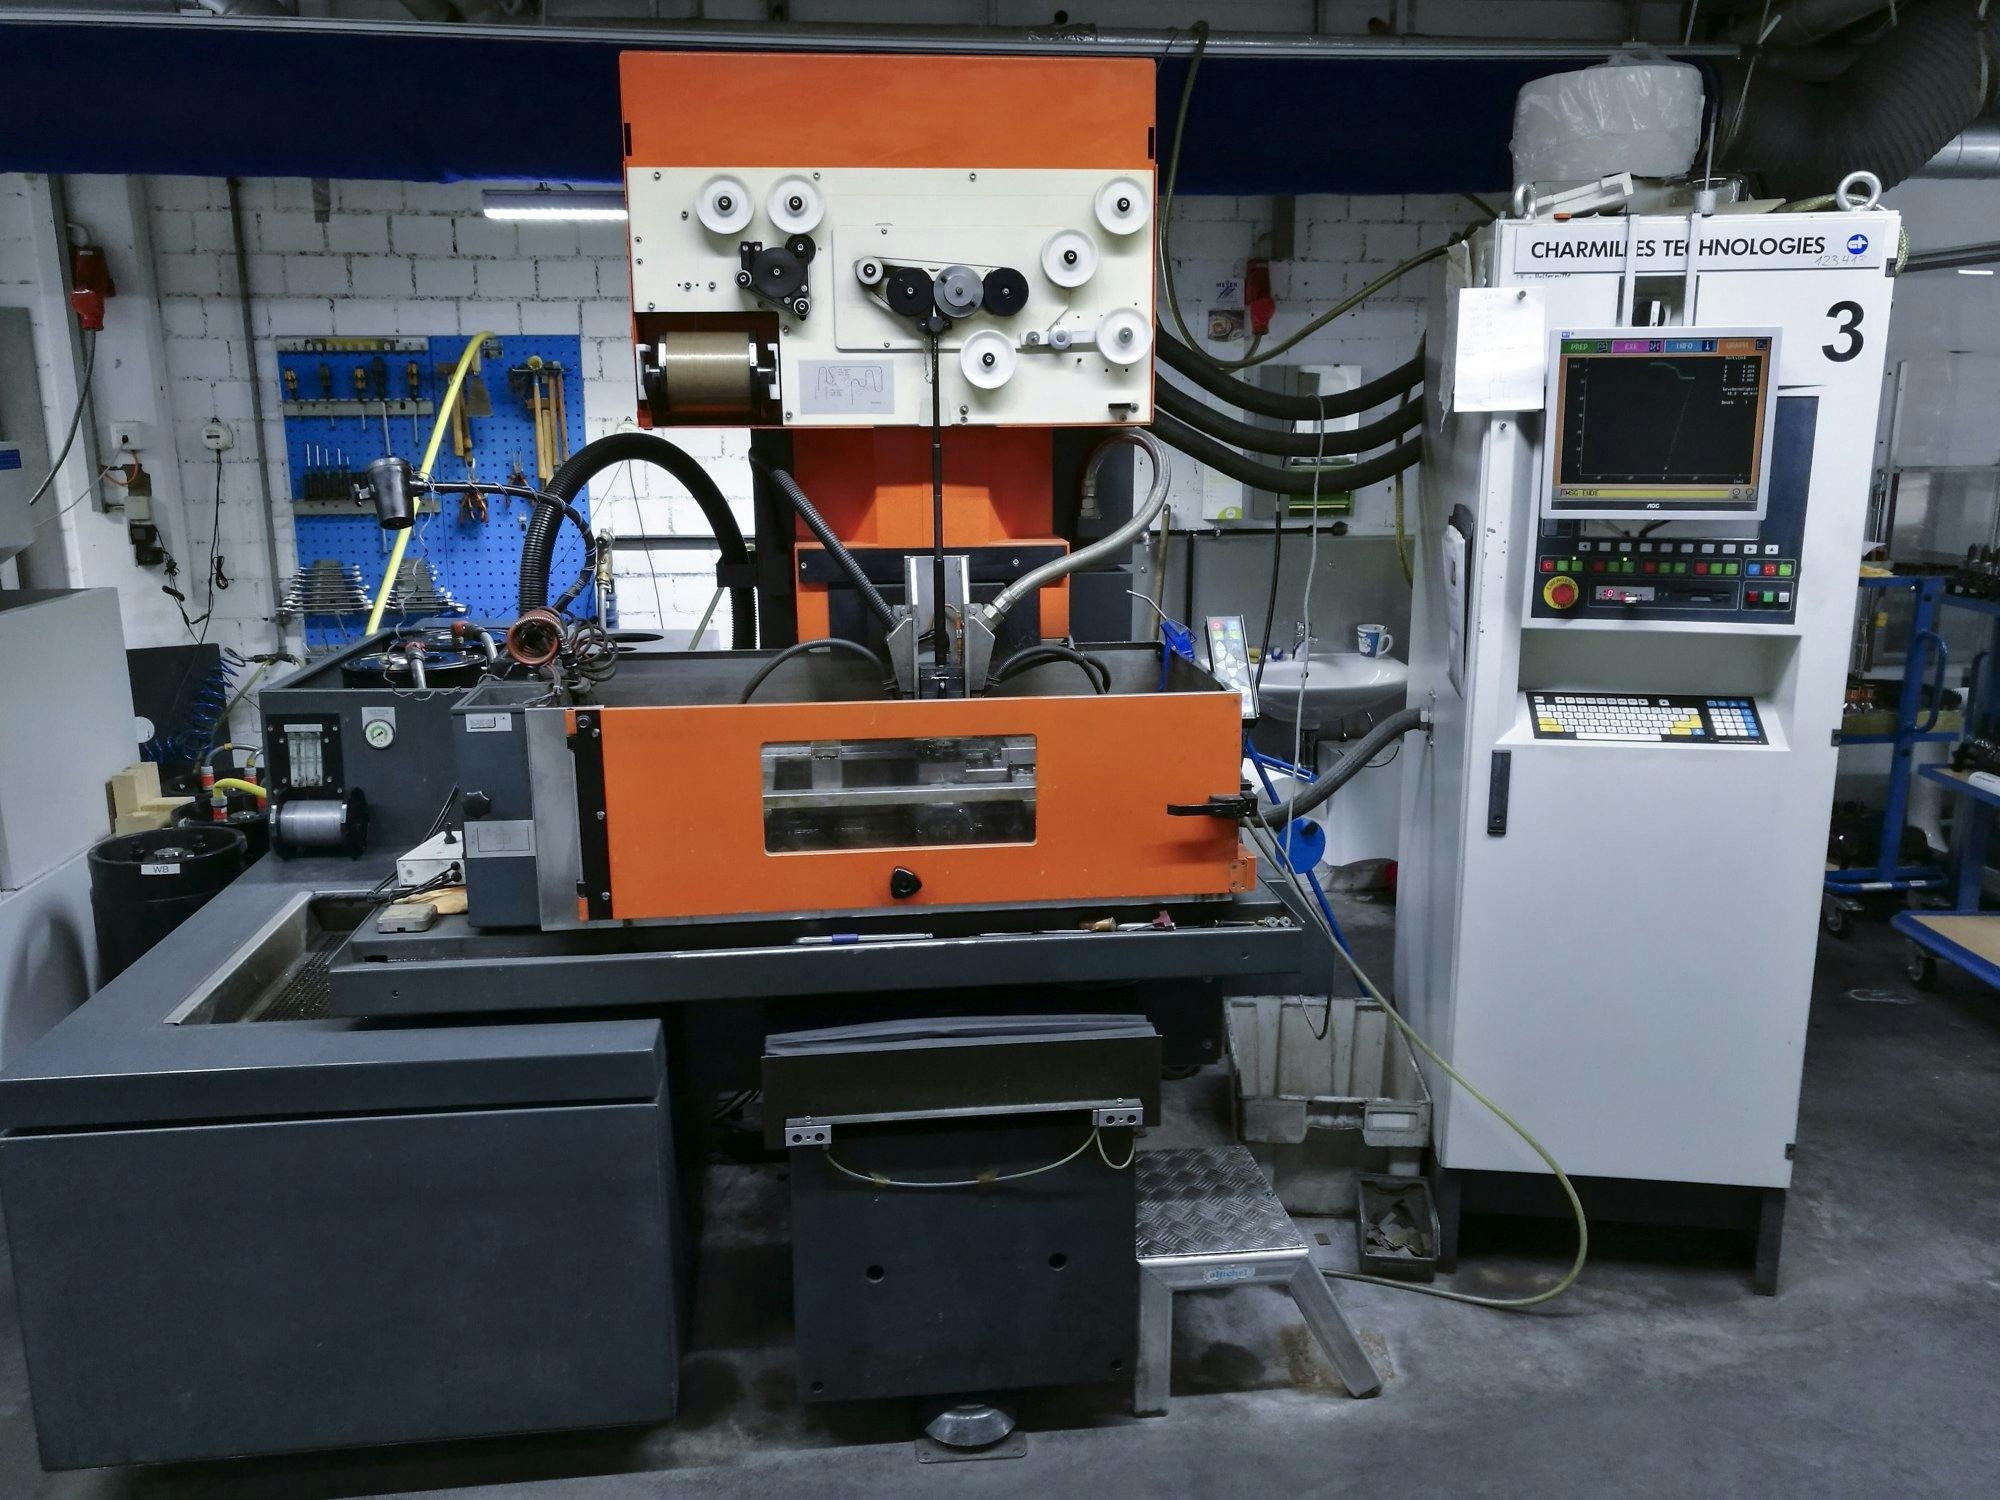 Front view of CHARMILLES ROBOFIL 2020-1 Machine